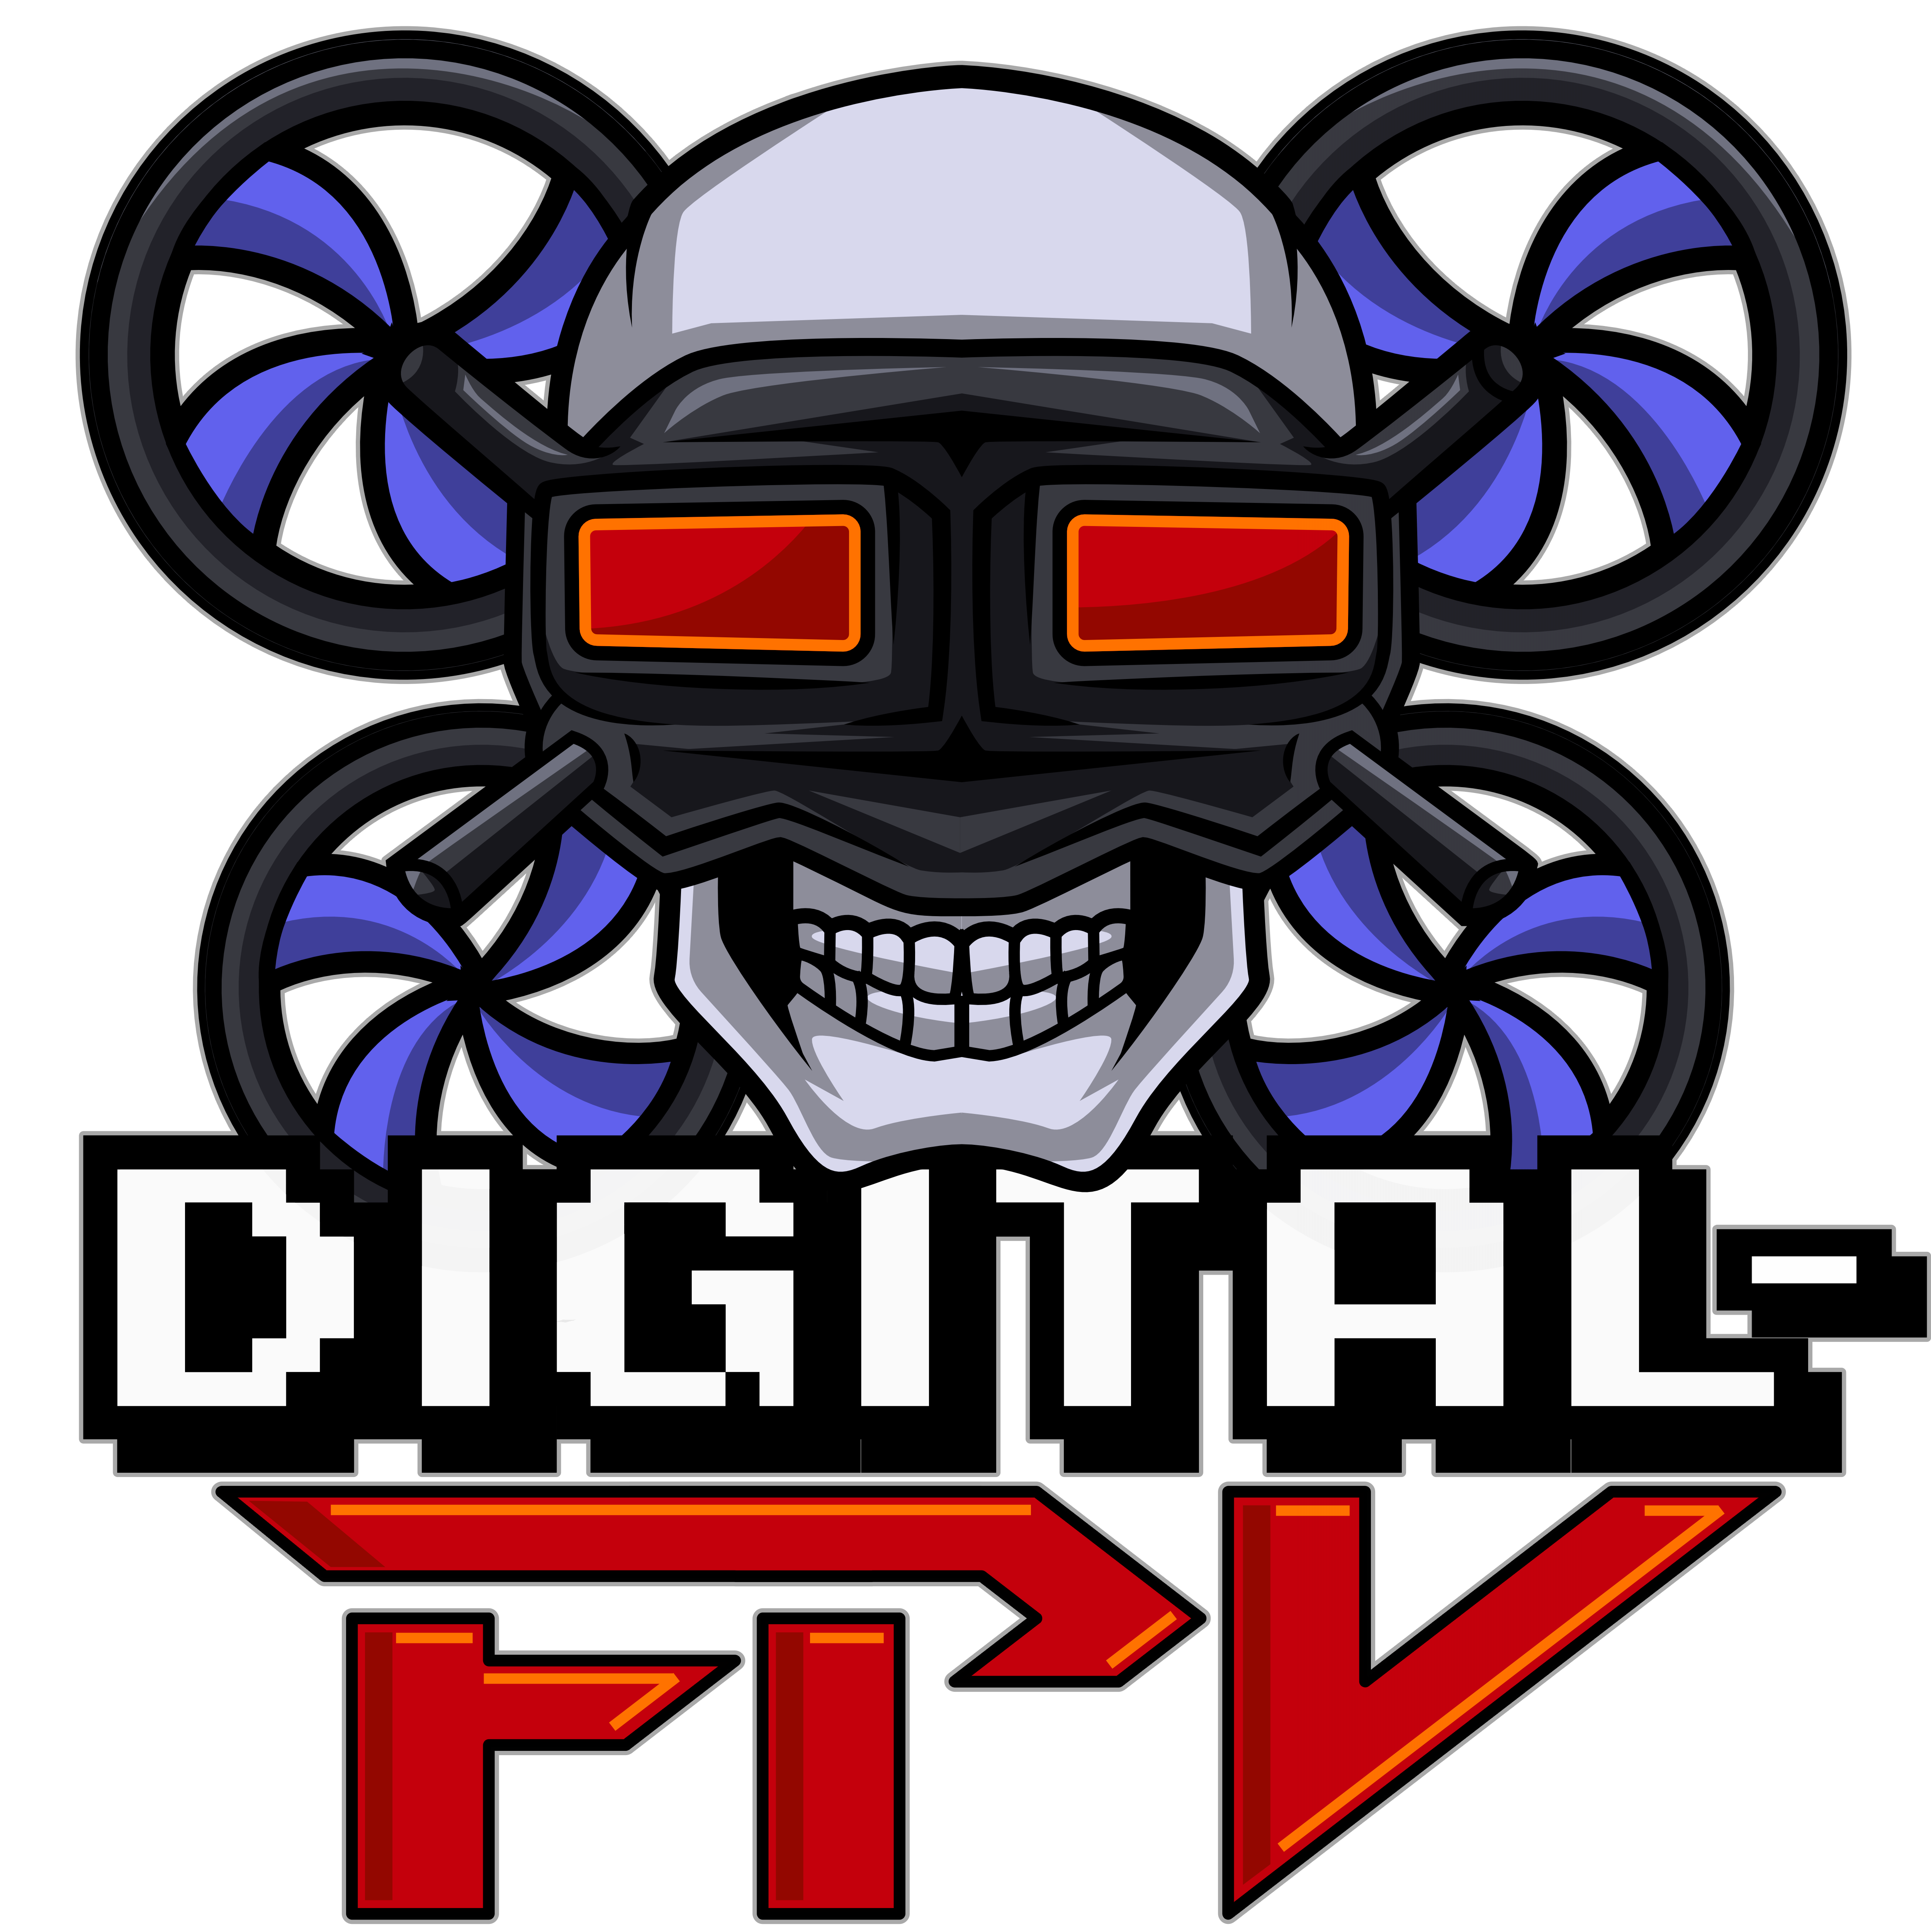 Digital FPV